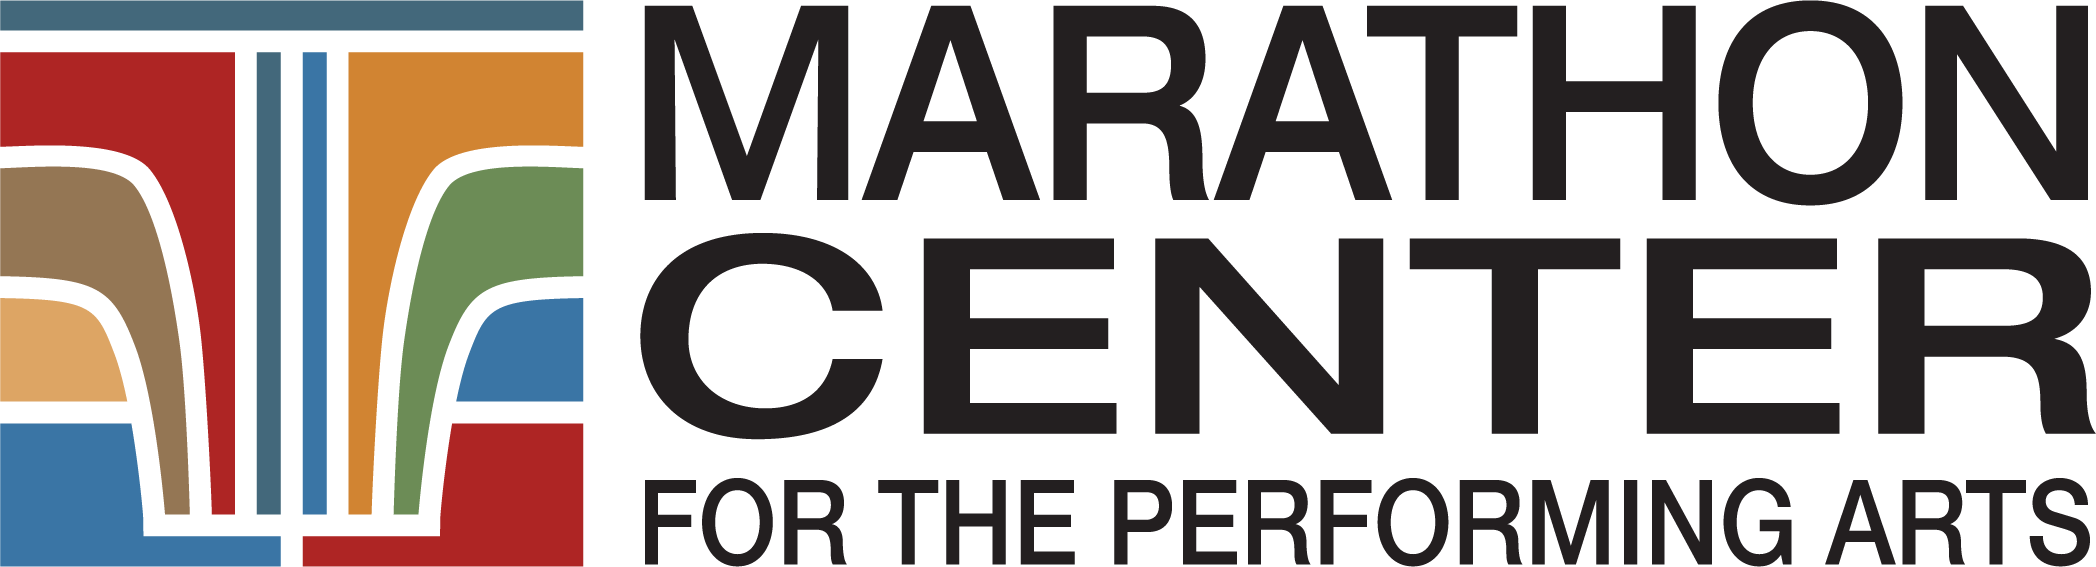 Marathon Center for the Performing Arts logo